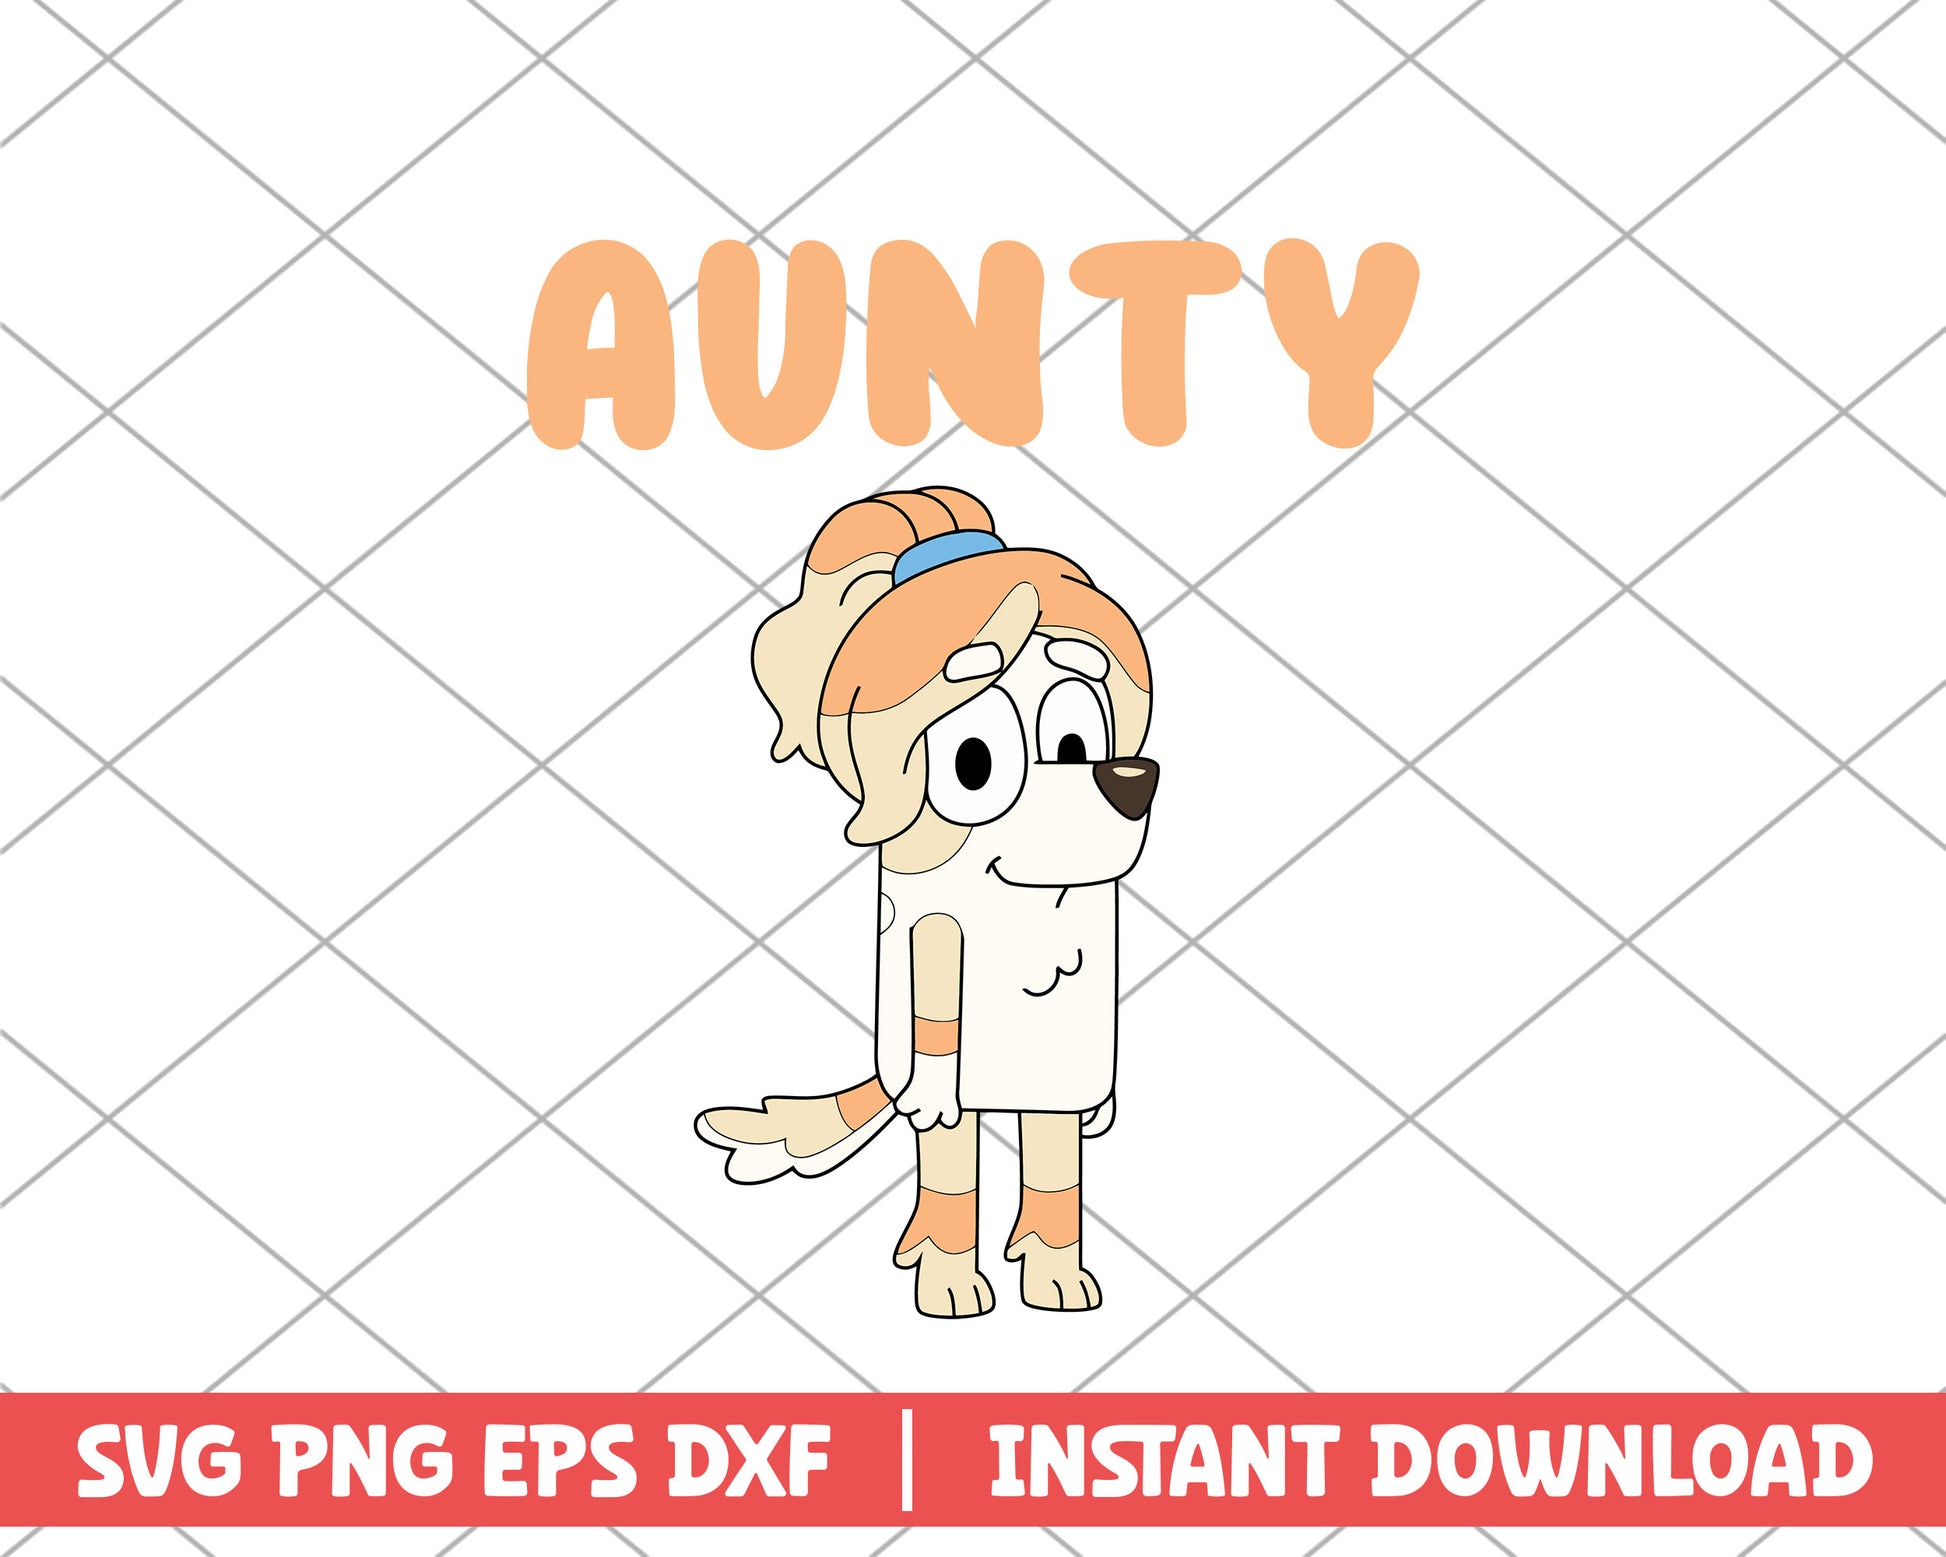 Aunty character cartoon svg